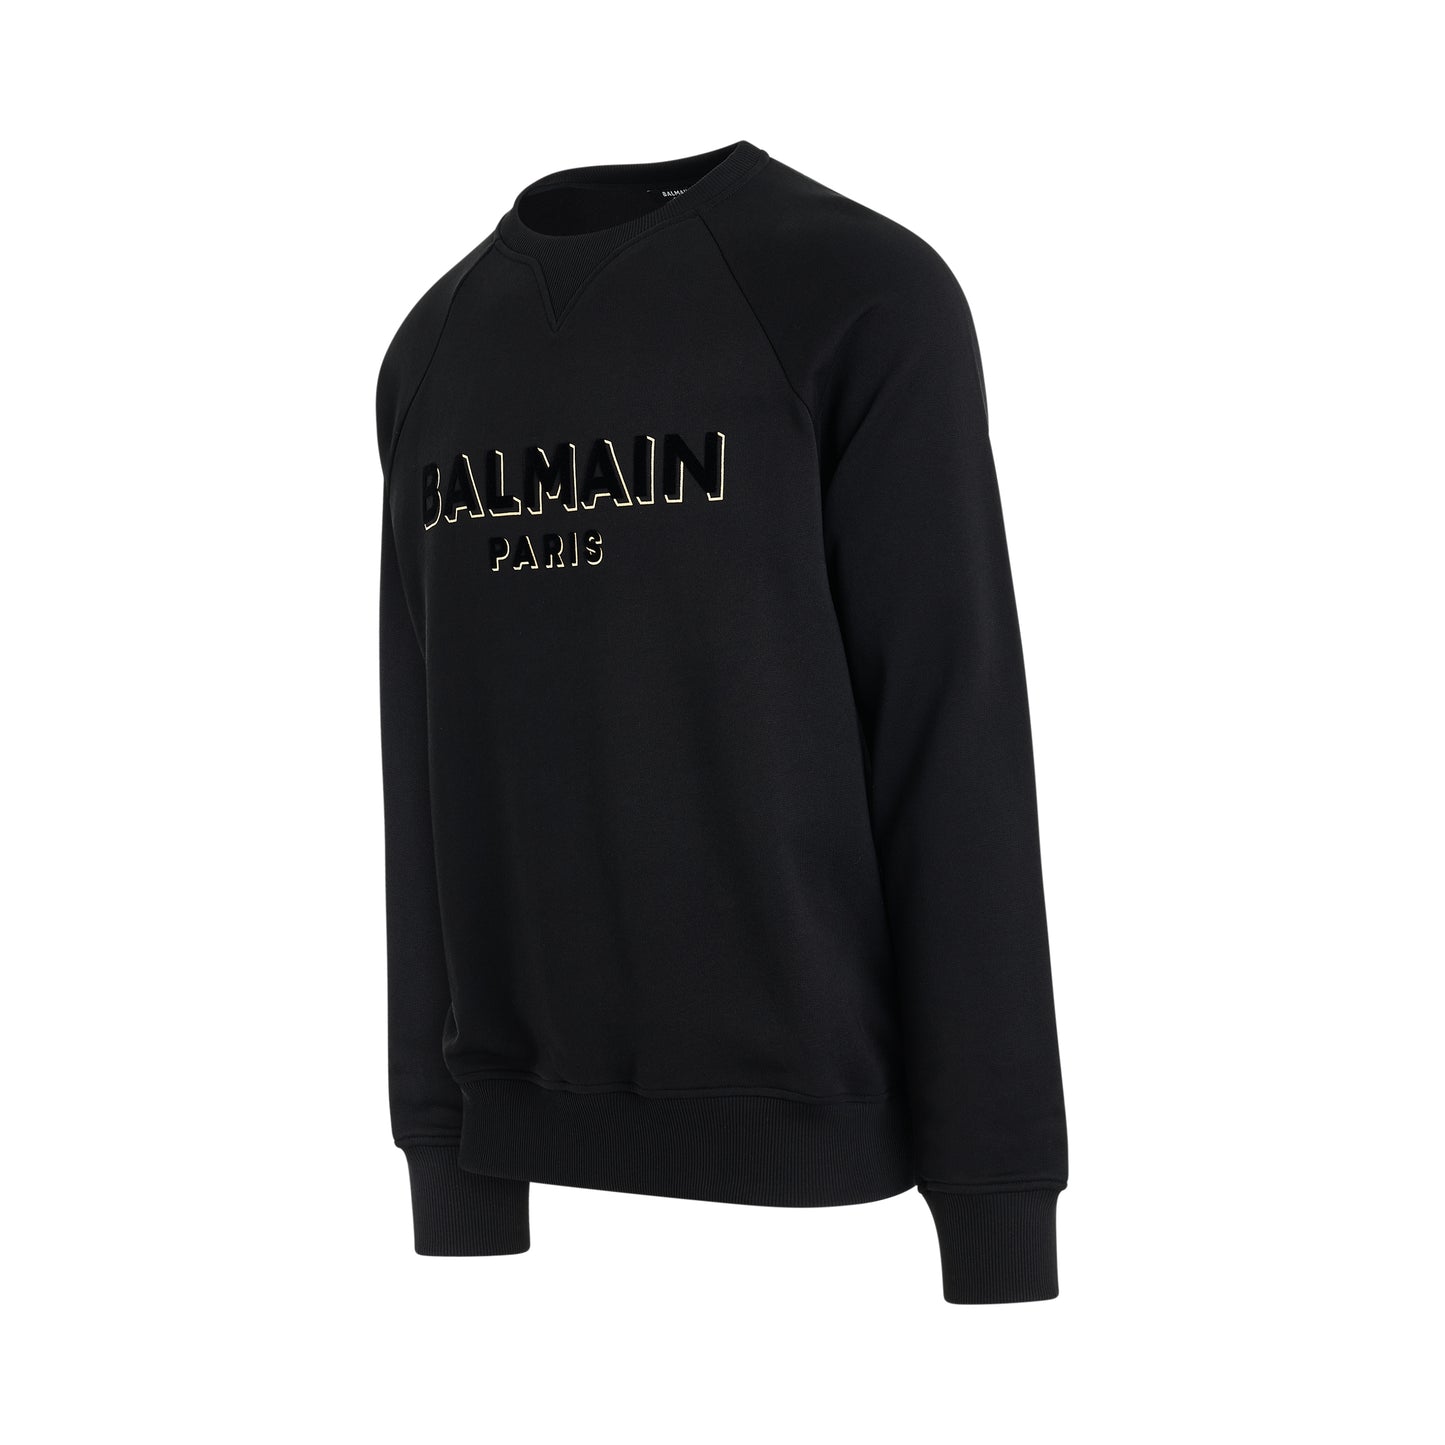 Balmain Flock & Foil Sweatshirt in Black/Gold